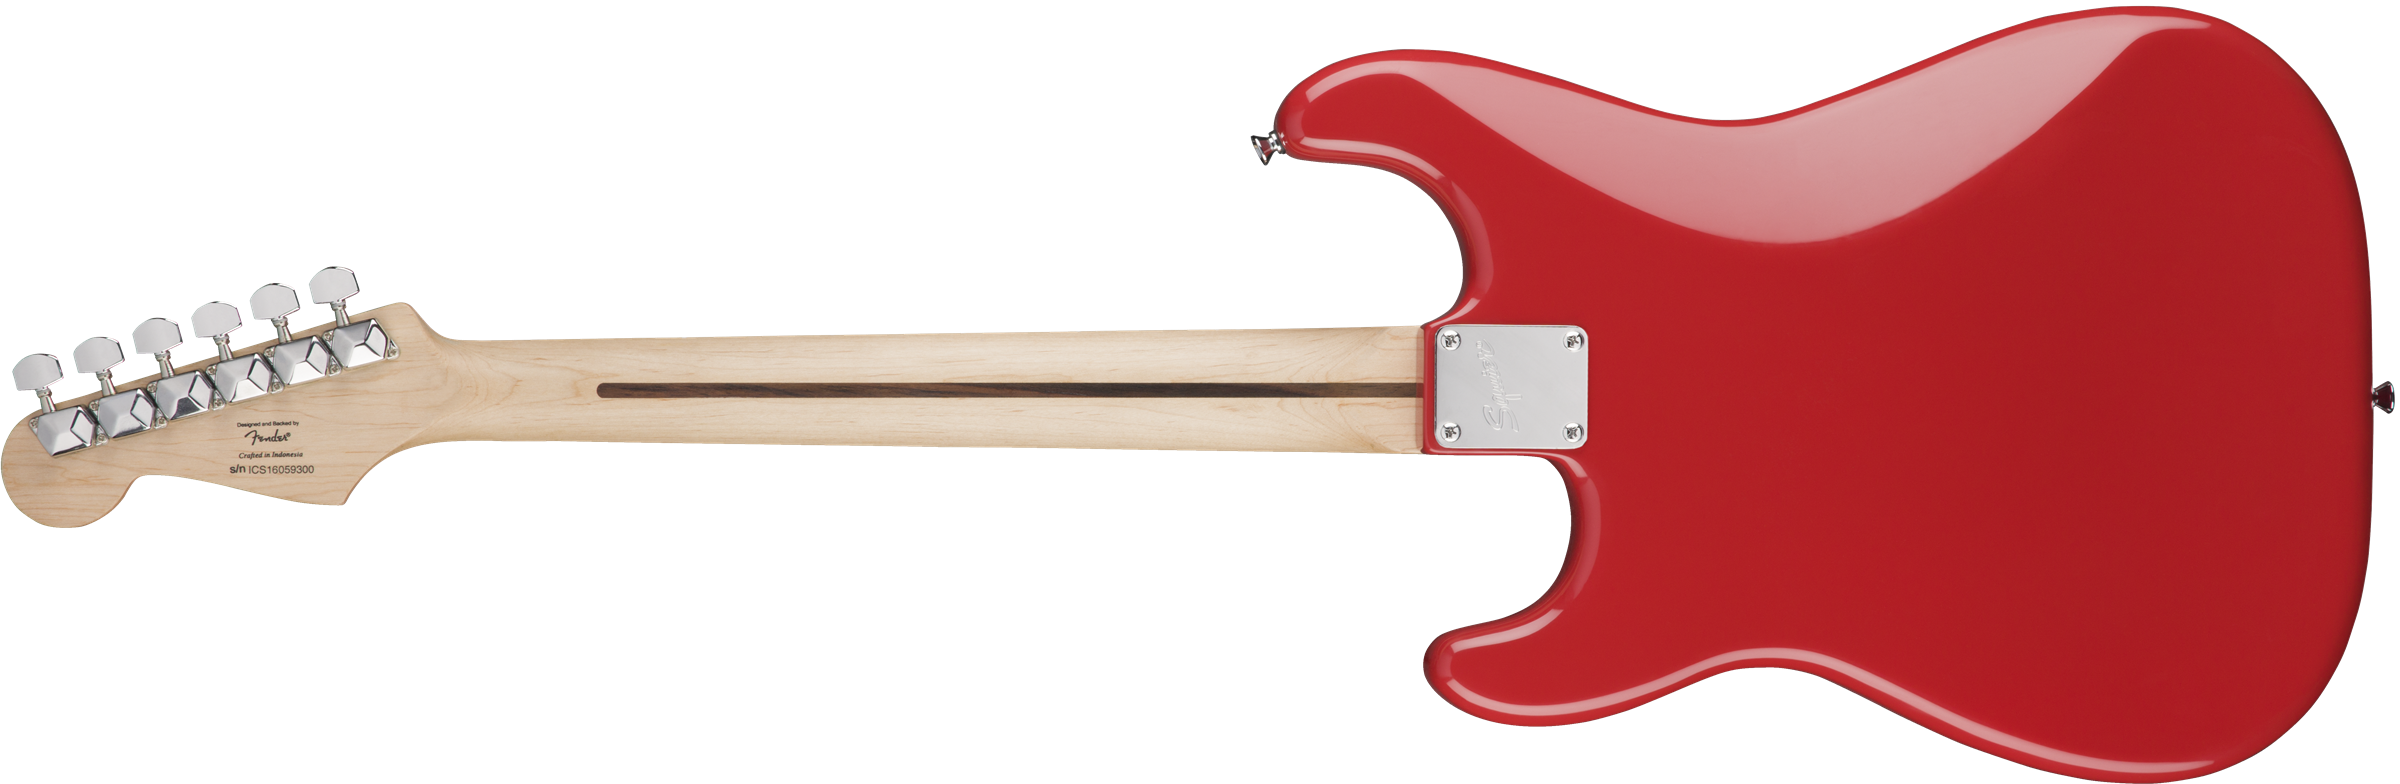 Squier Bullet Stratocaster Ht Sss (lau) - Fiesta Red - Guitarra eléctrica con forma de str. - Variation 1